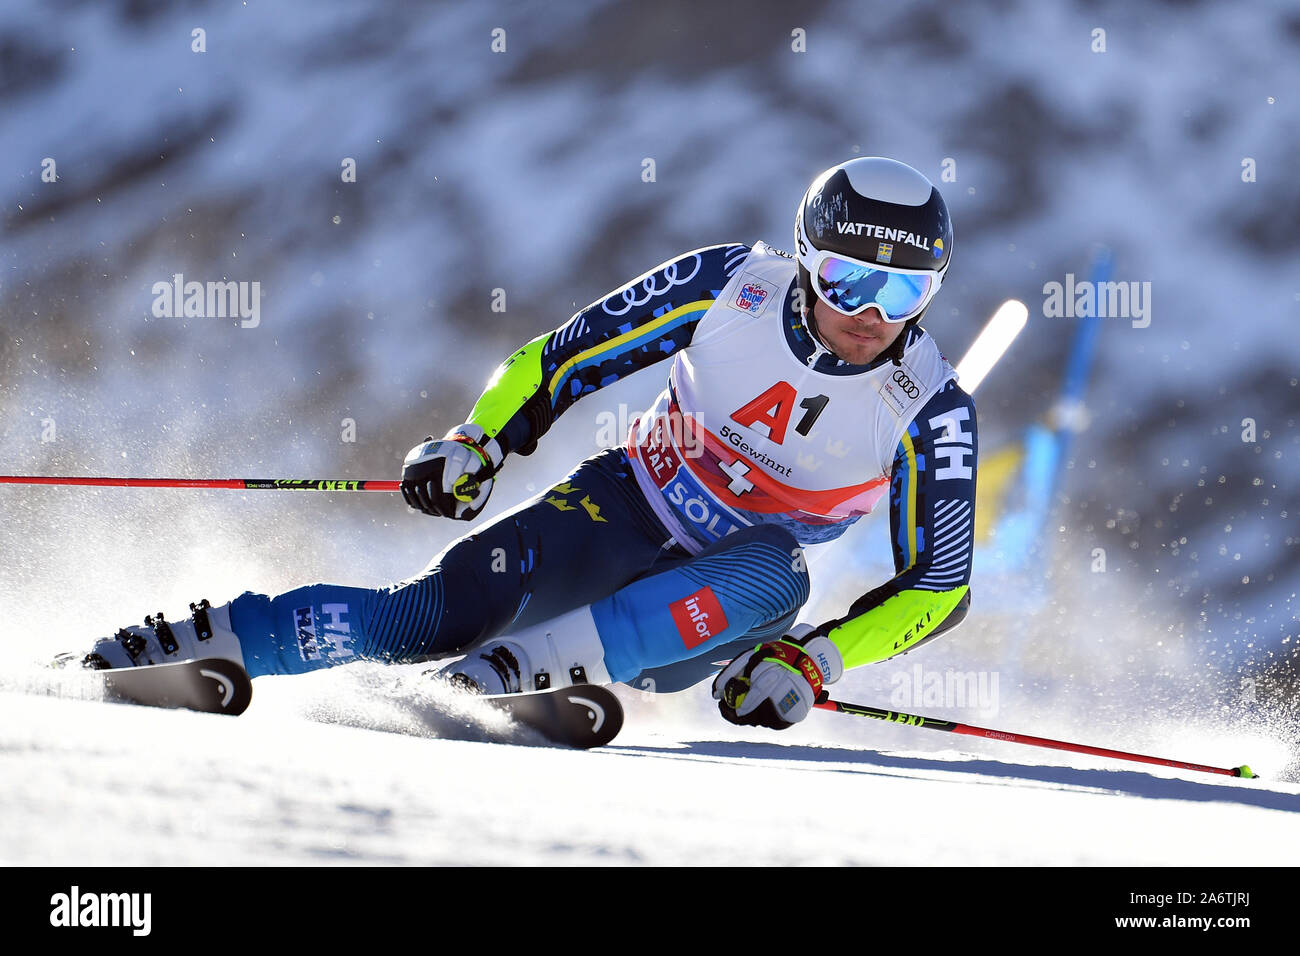 Matts OLSSON (SWE), action, men's giant slalom, Men's Giant Slalom. Alpine  Skiing, World Cup in Soelden on the Rettenbachferner, Rettenbach Glacier,  season 2019/2020, 19/20, on 27.10.2019. | usage worldwide Stock Photo -  Alamy